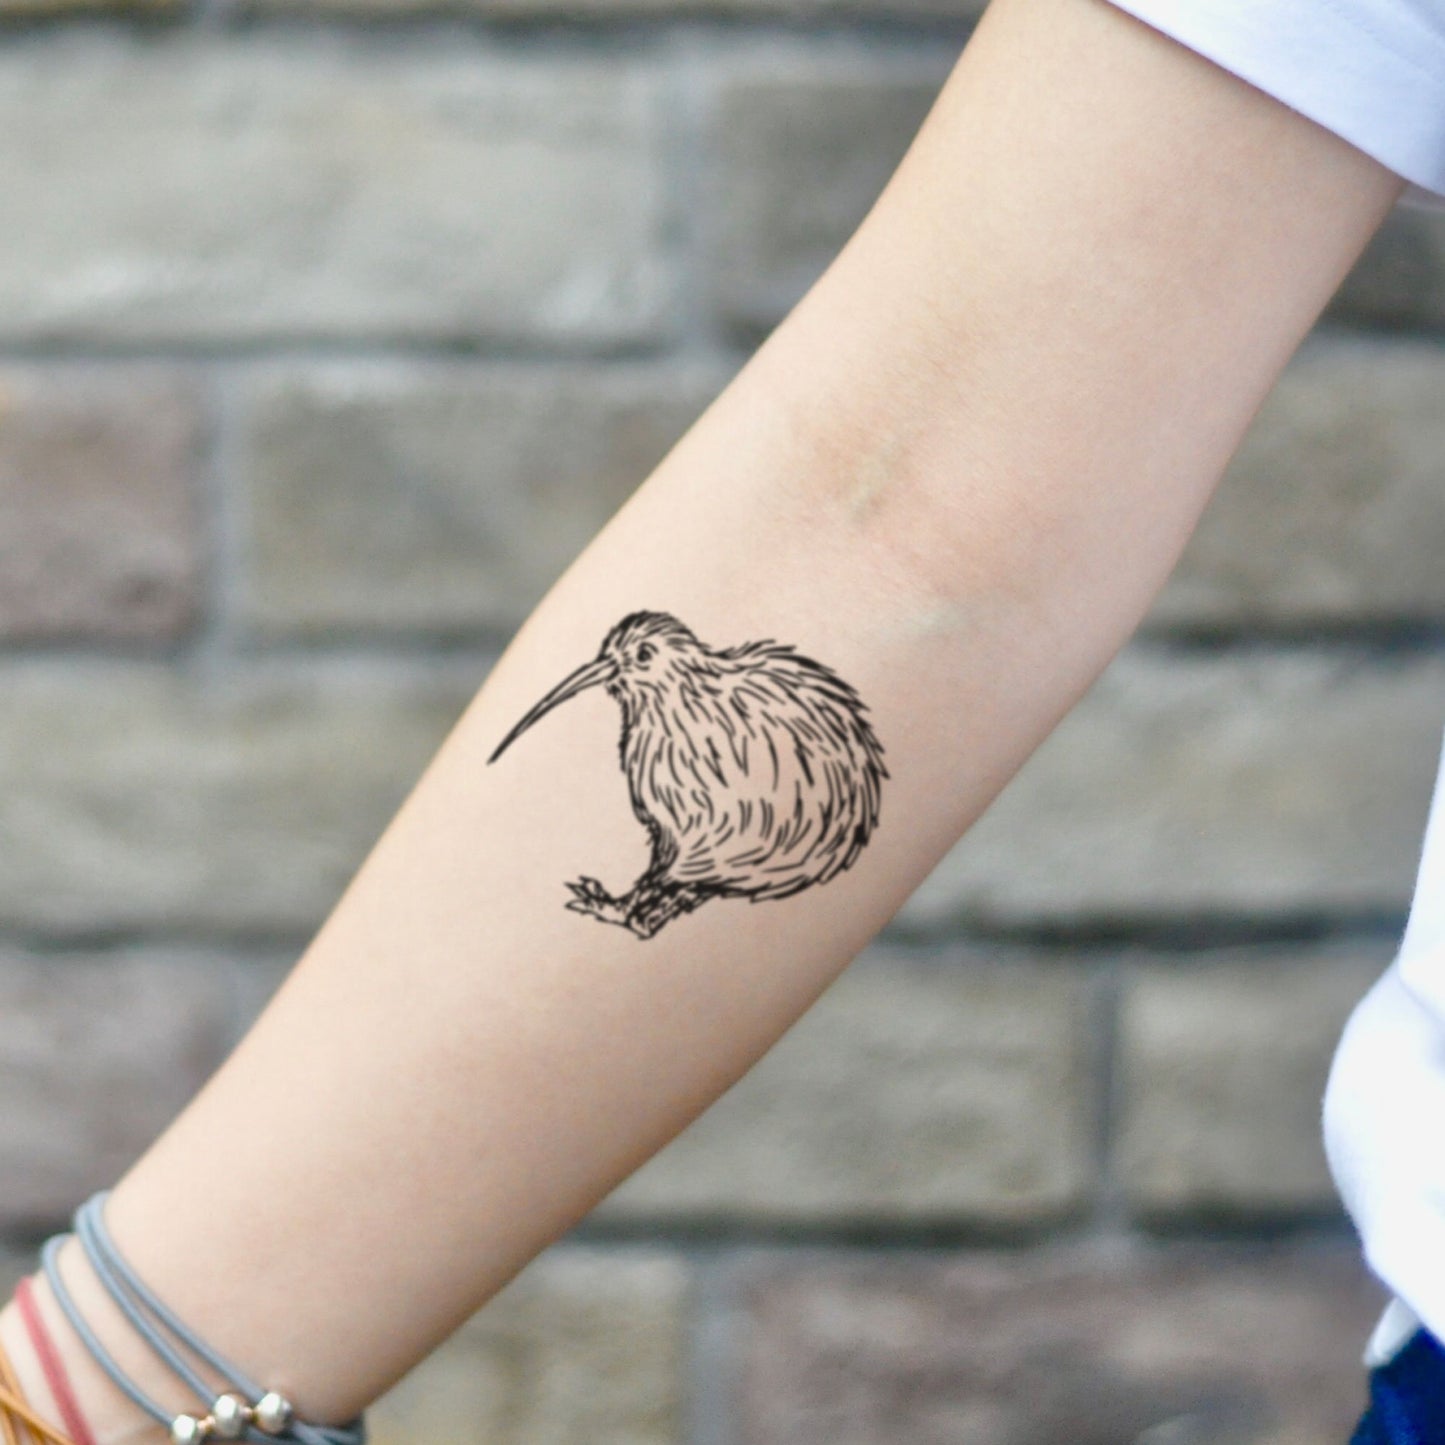 fake small kiwi bird animal temporary tattoo sticker design idea on inner arm